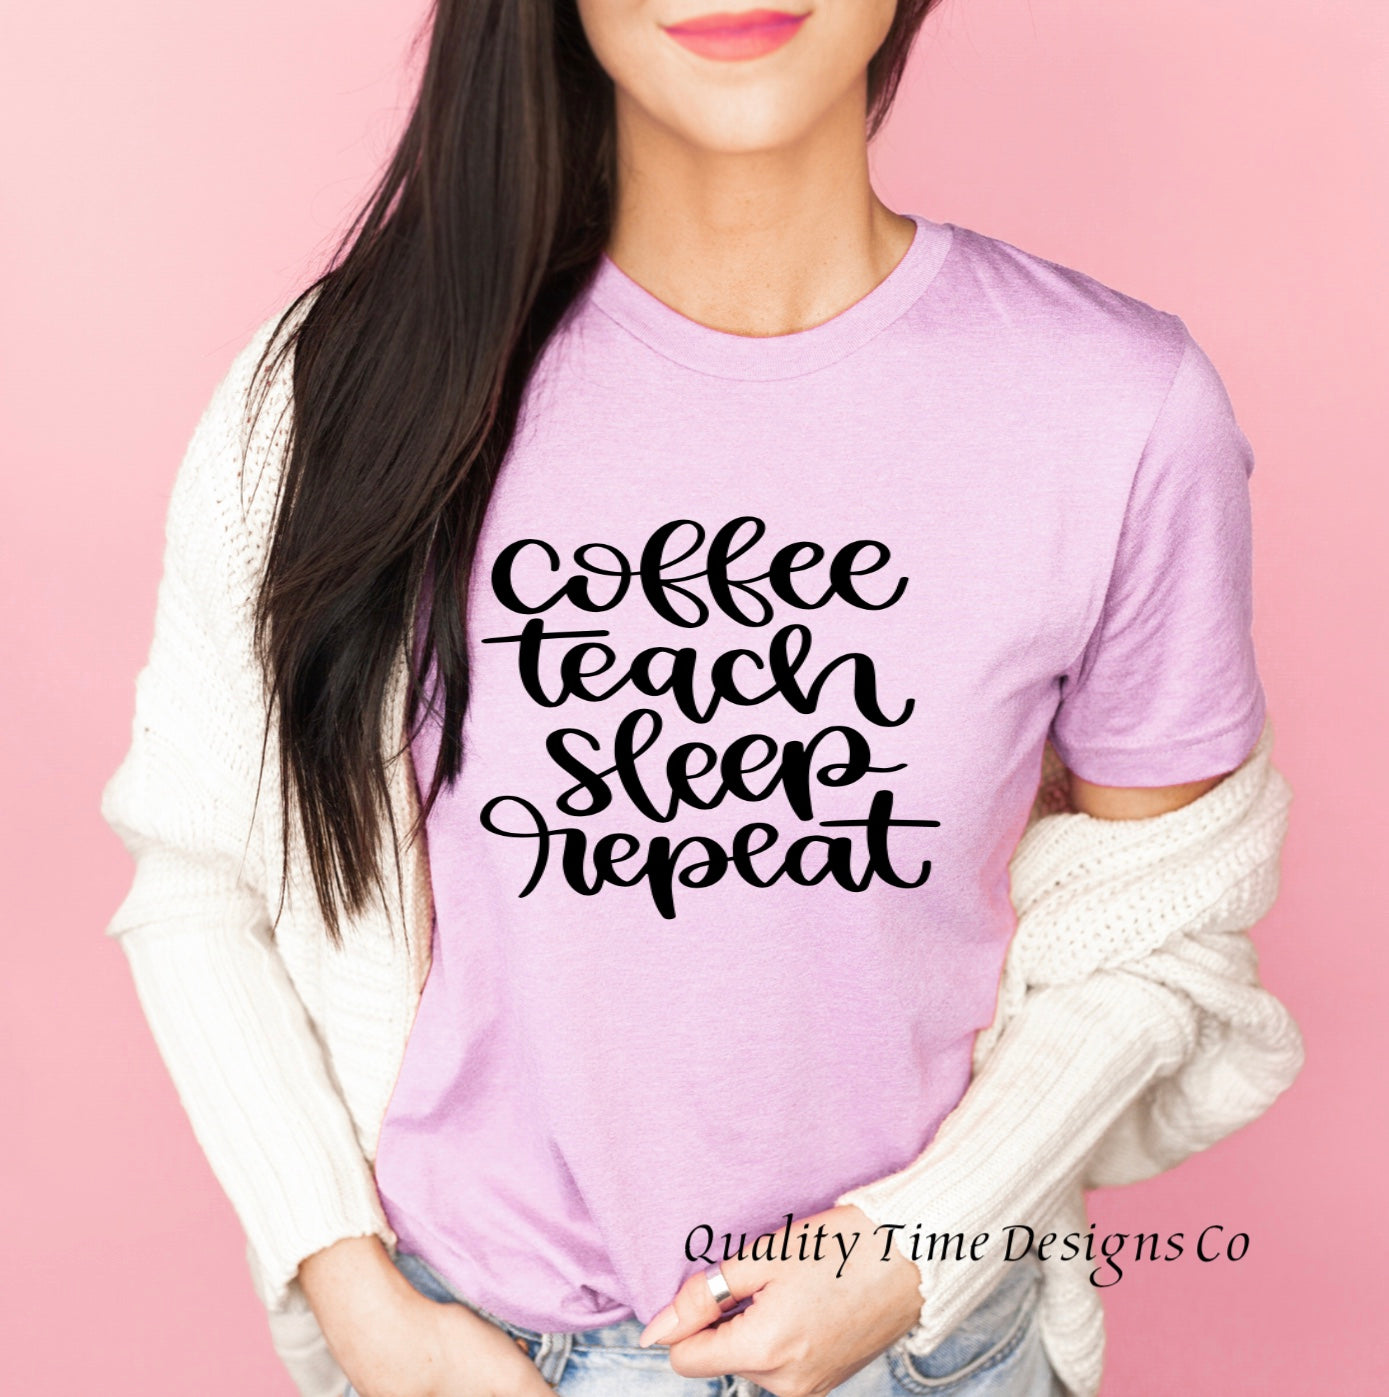 Coffee teach sleep repeat t-shirt 